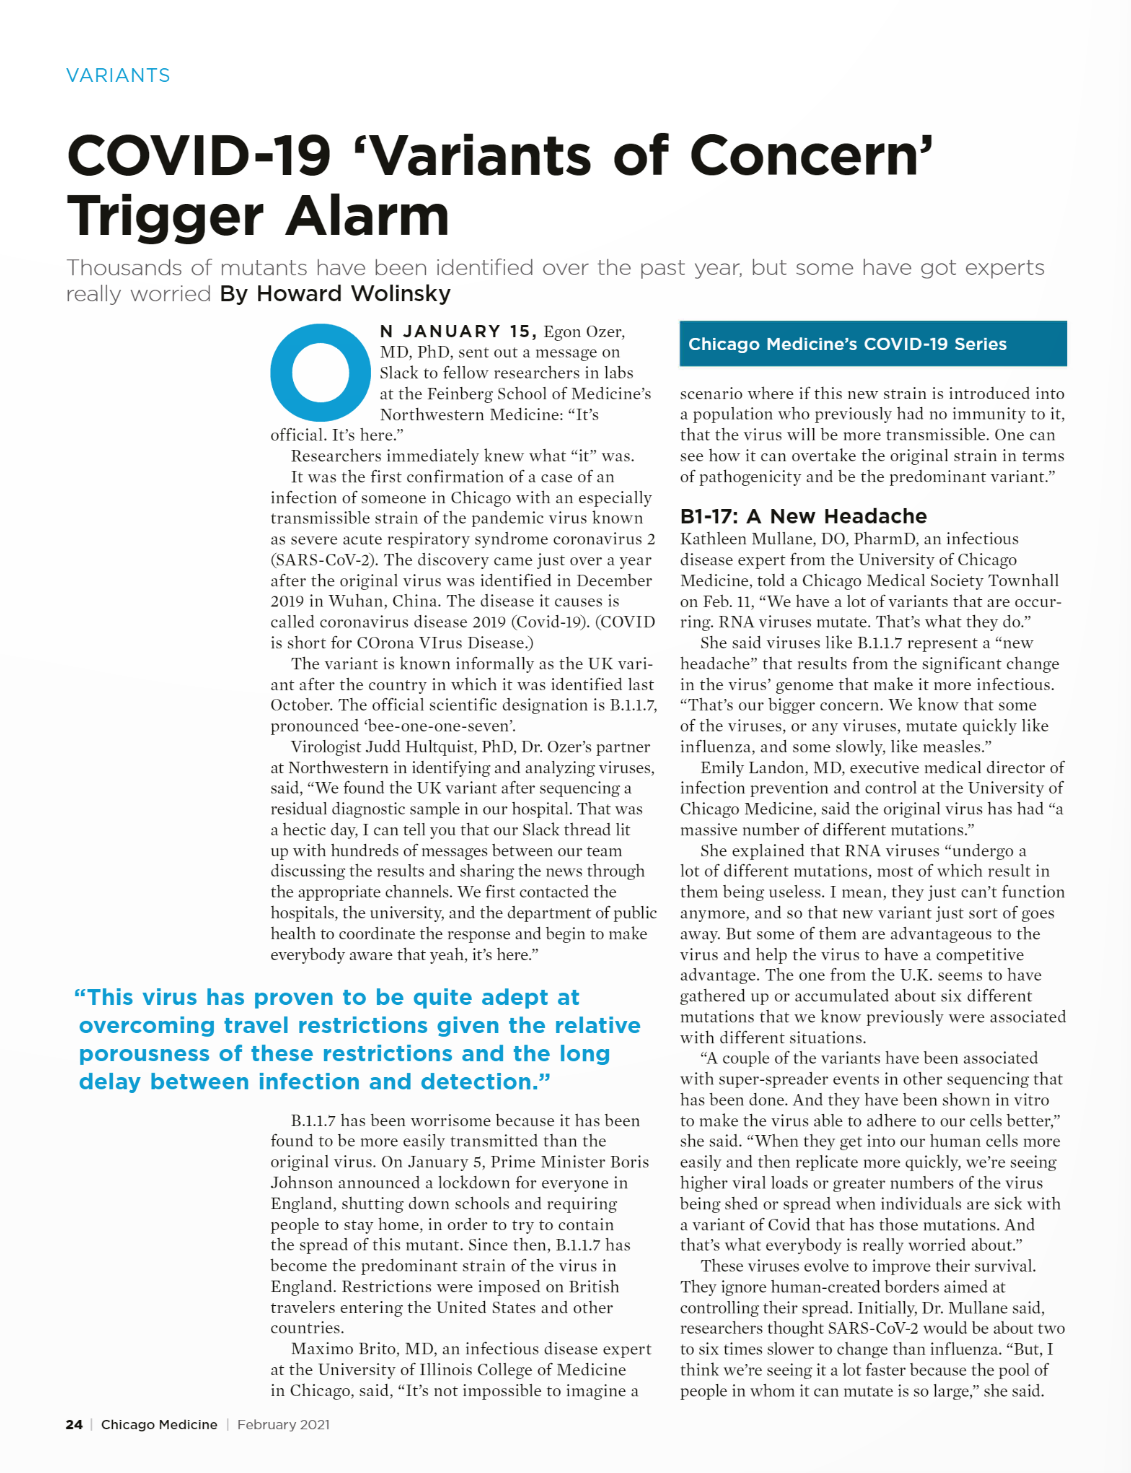 COVID-19 'Variants of Concern' Trigger Alarm